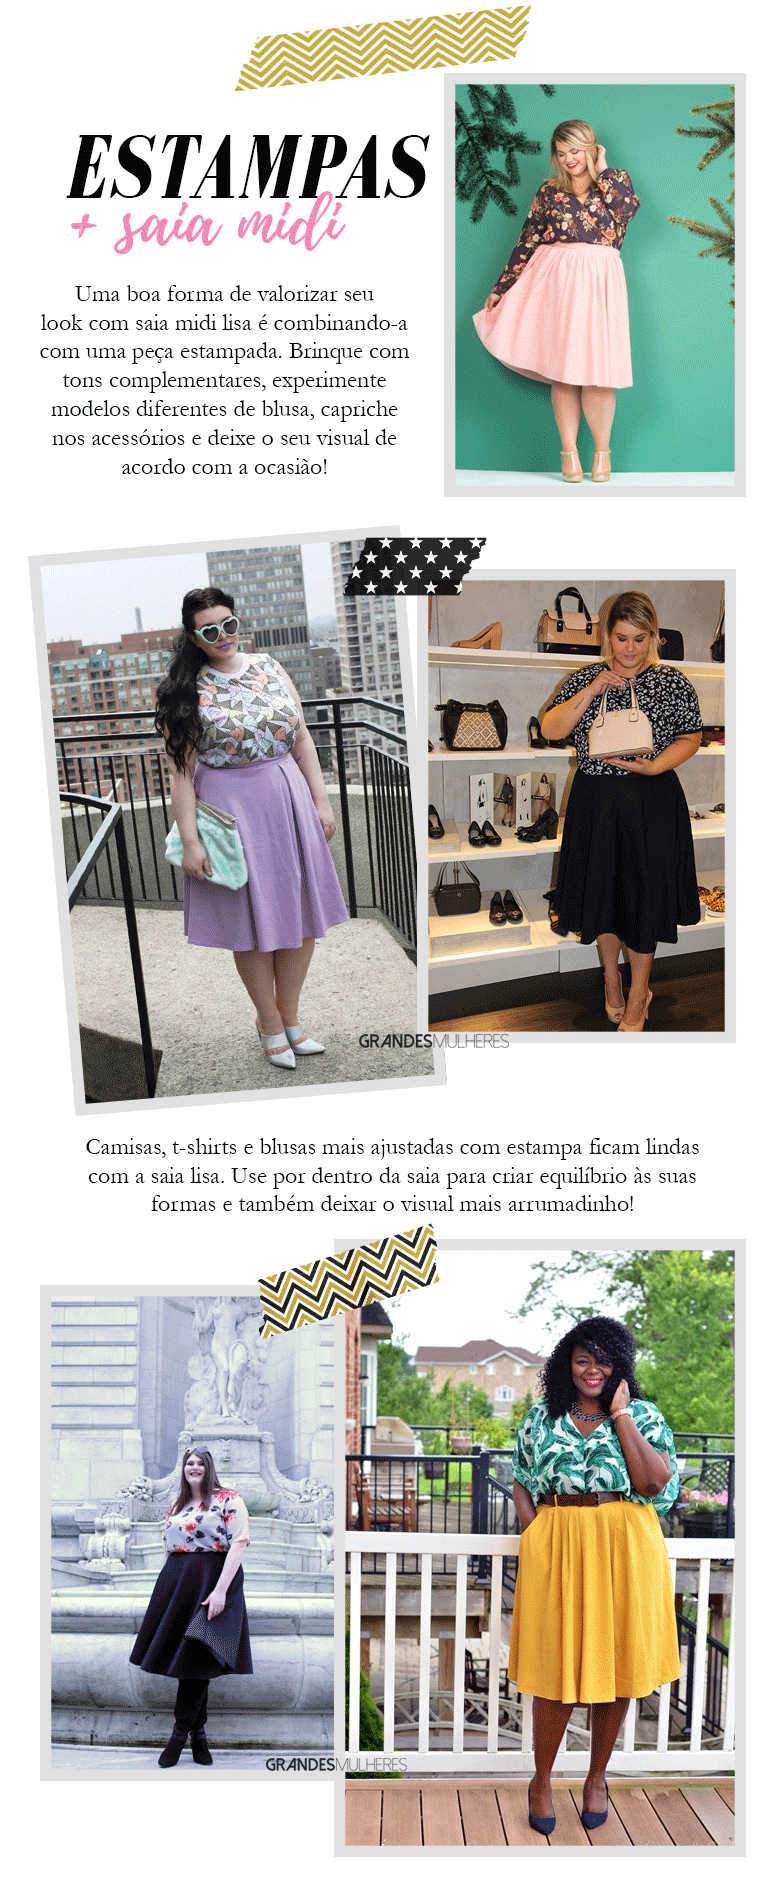 Guia de moda - como usar saia midi plus size 1 - estampa e saia midi - grandes mulheres